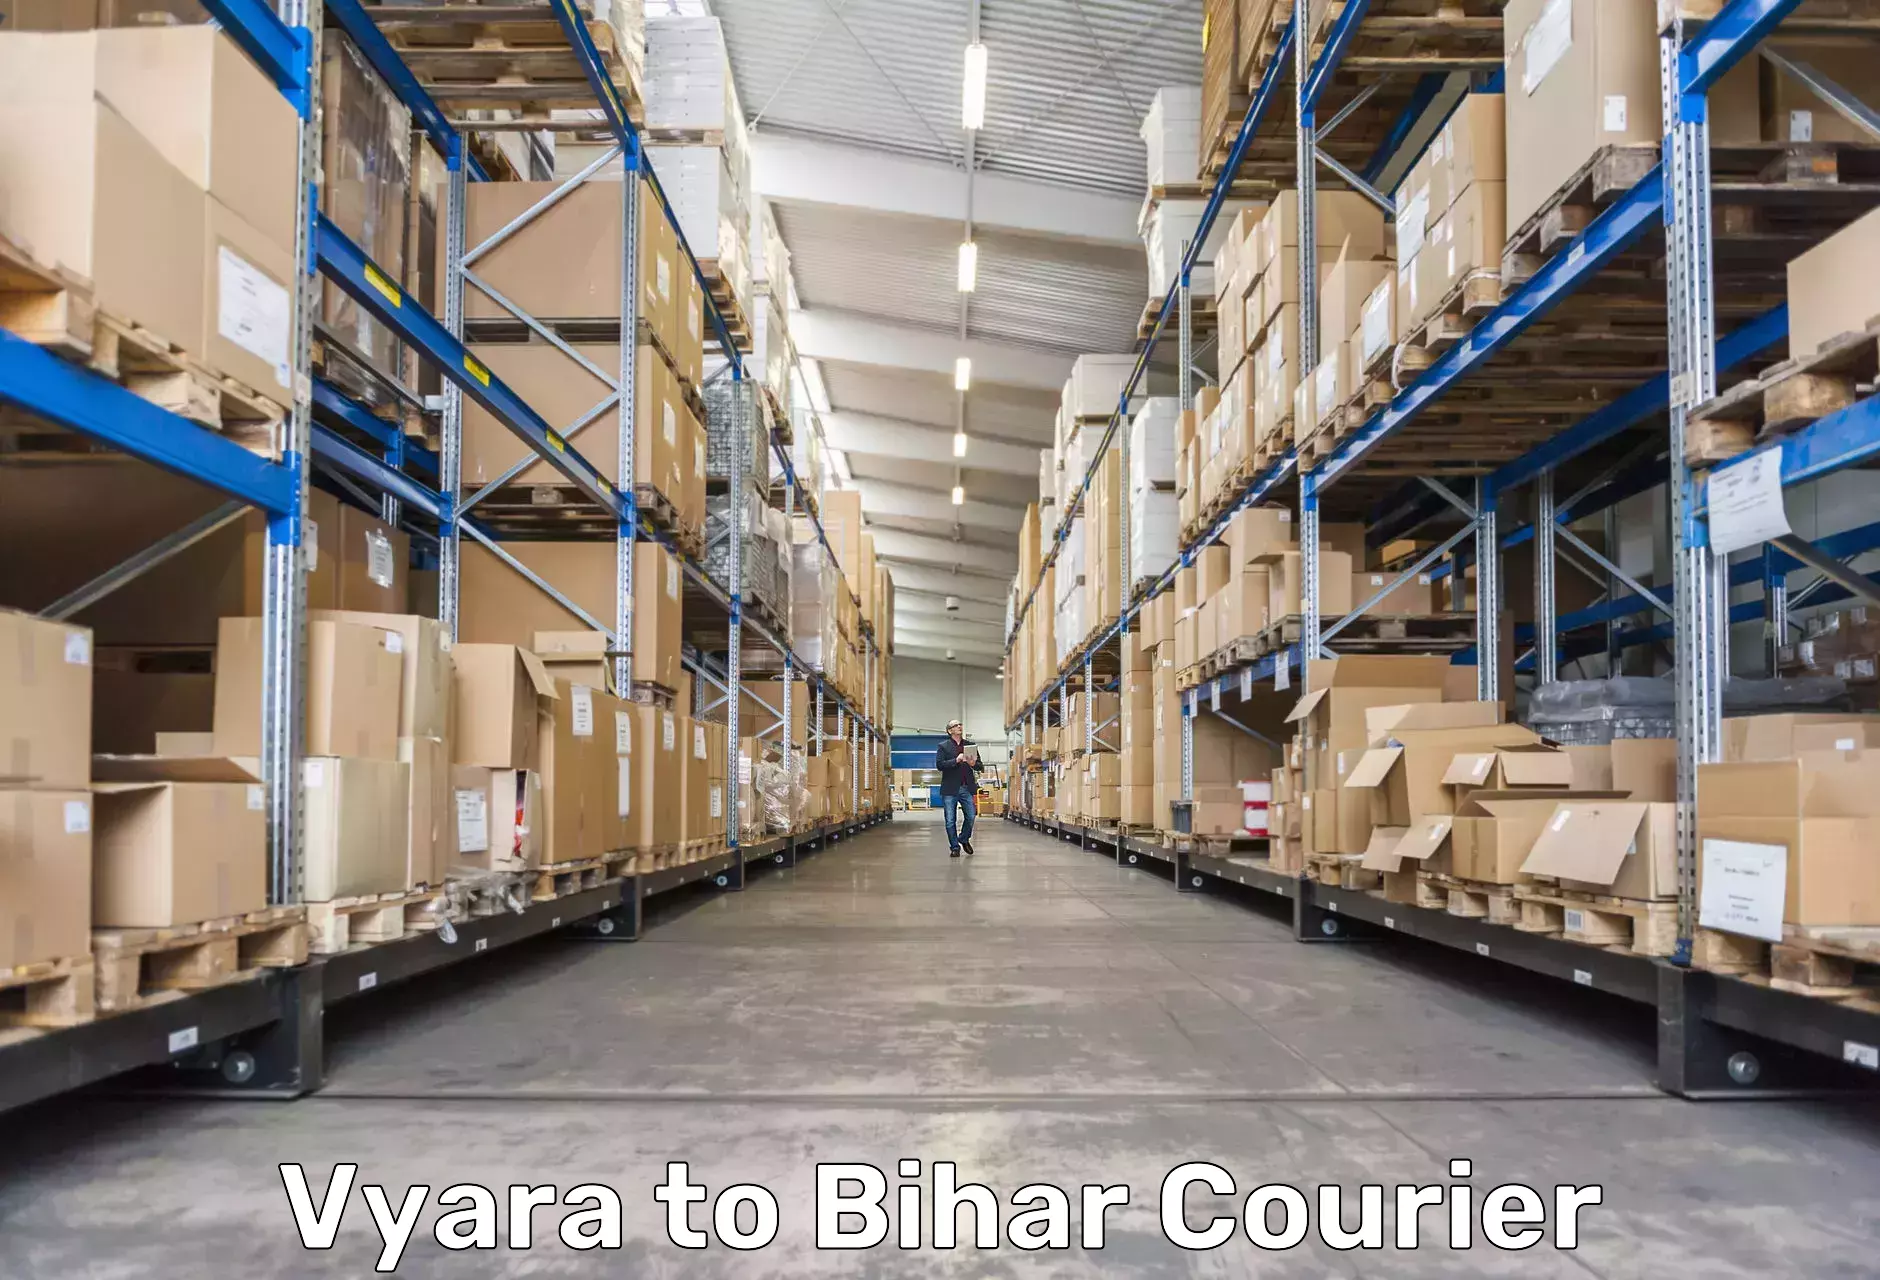 Digital courier platforms Vyara to Biraul